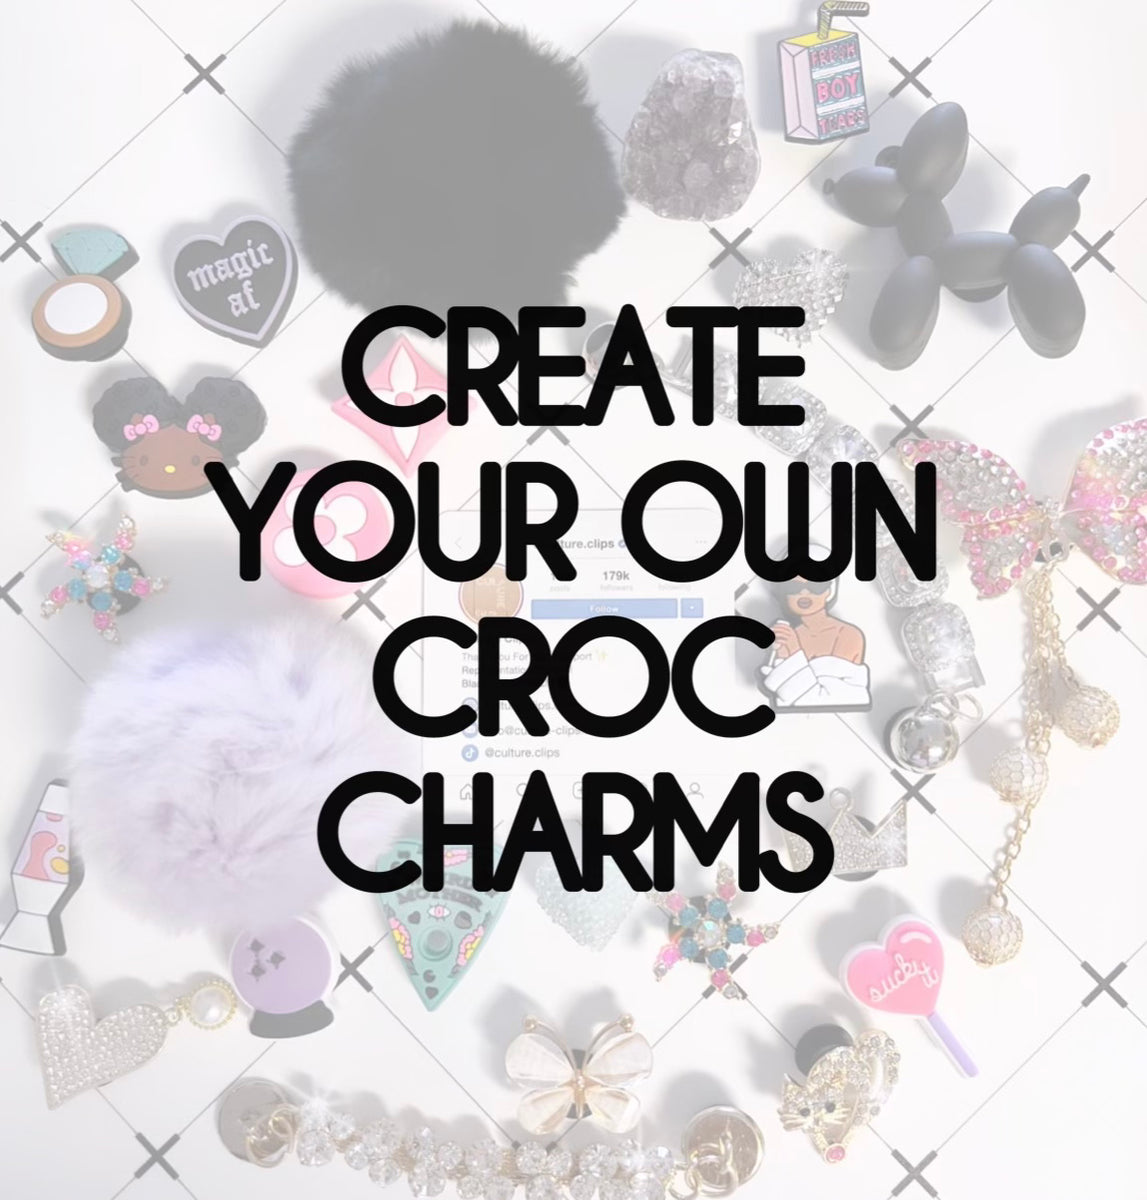 Show Some Loveee🥰💗 #crocs #customcrocs#designercharms #smallbusiness